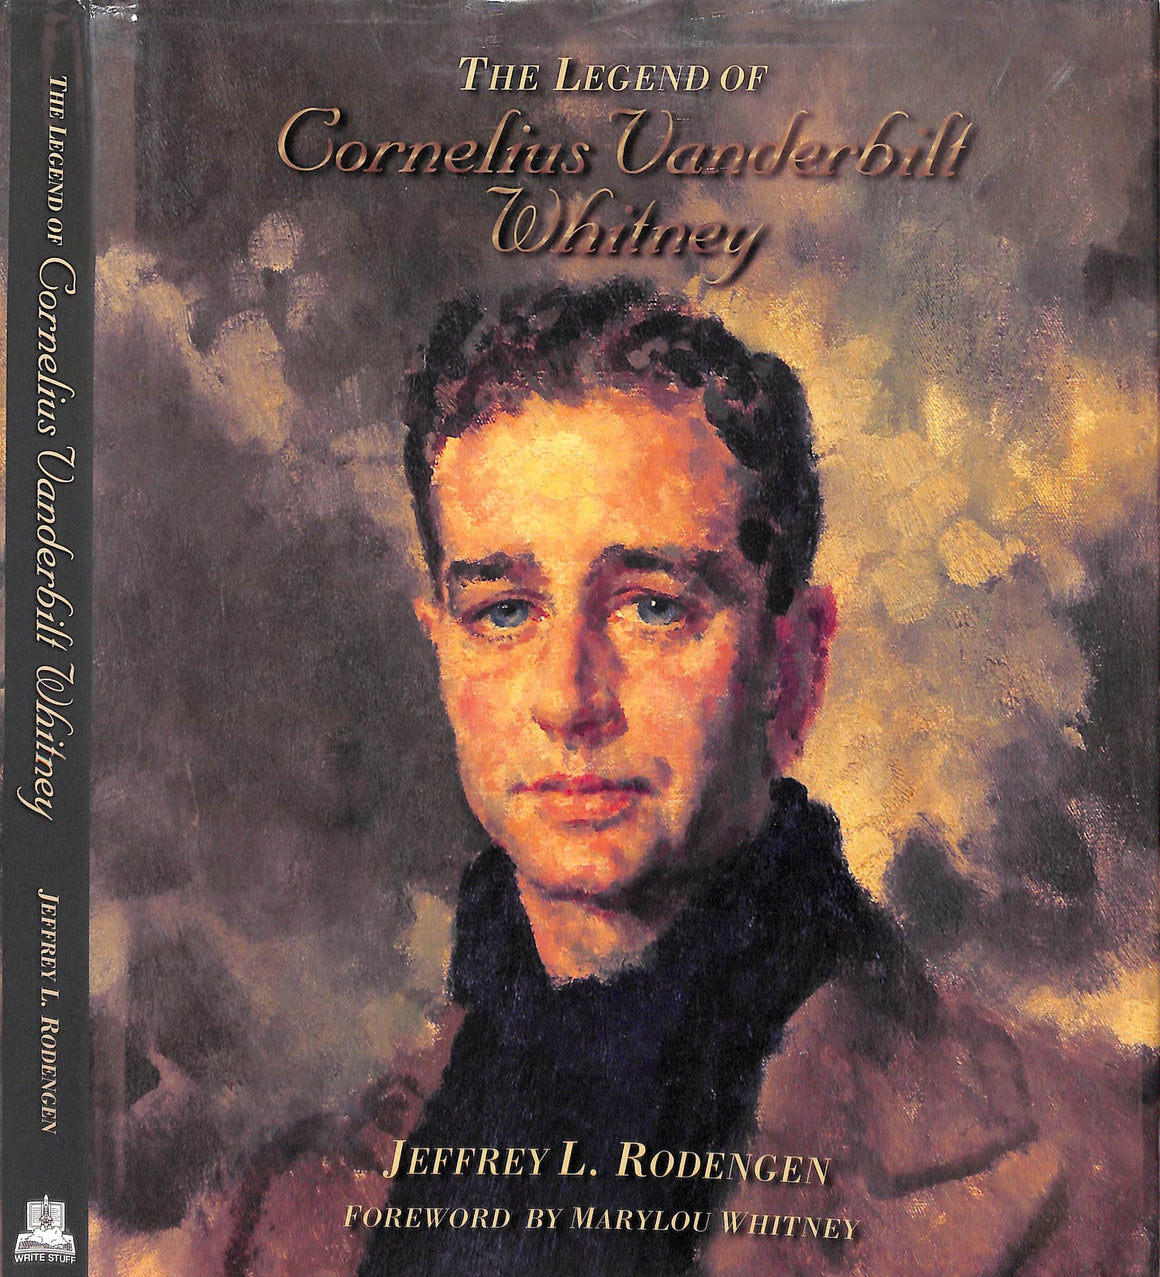 "The Legend Of Cornelius Vanderbilt Whitney" 2000 RODENGEN, Jeffrey L.